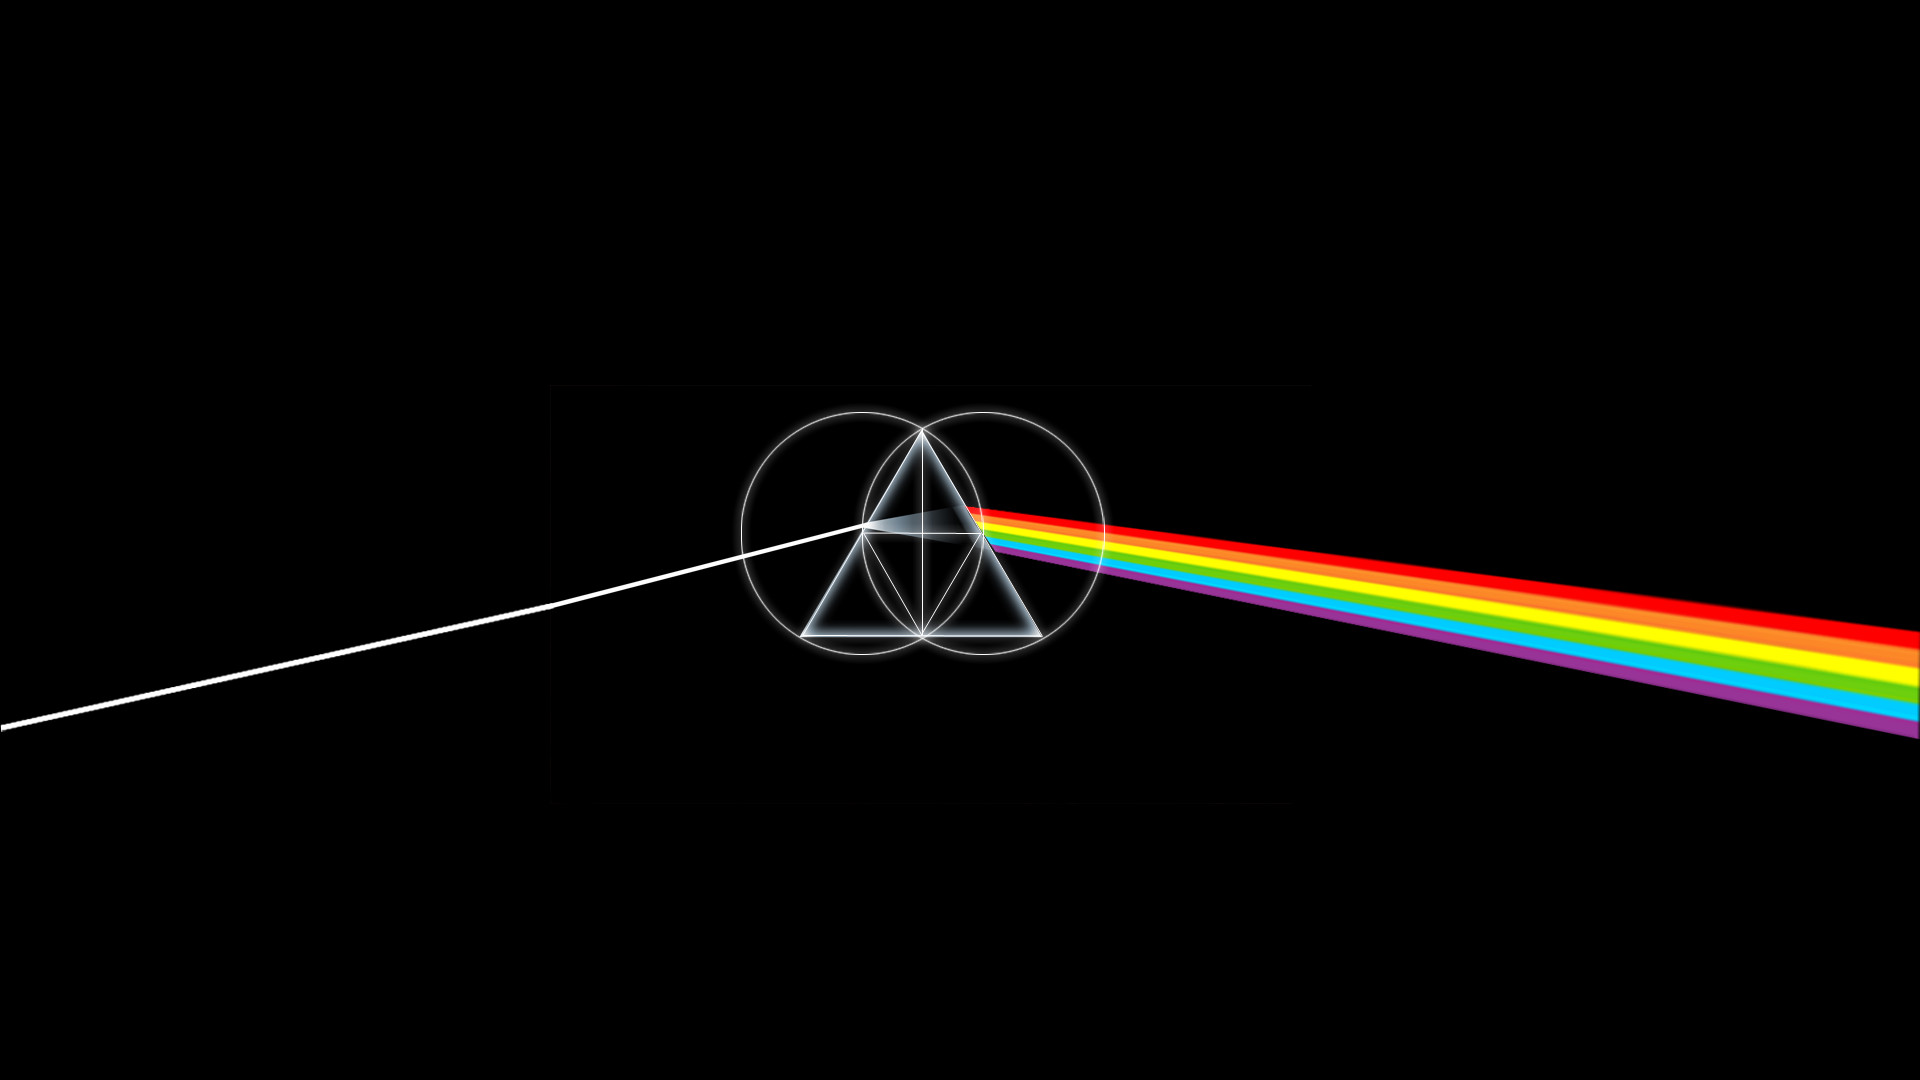 1920x1080 Pink Floyd - The Dark Side Of Moon 752932